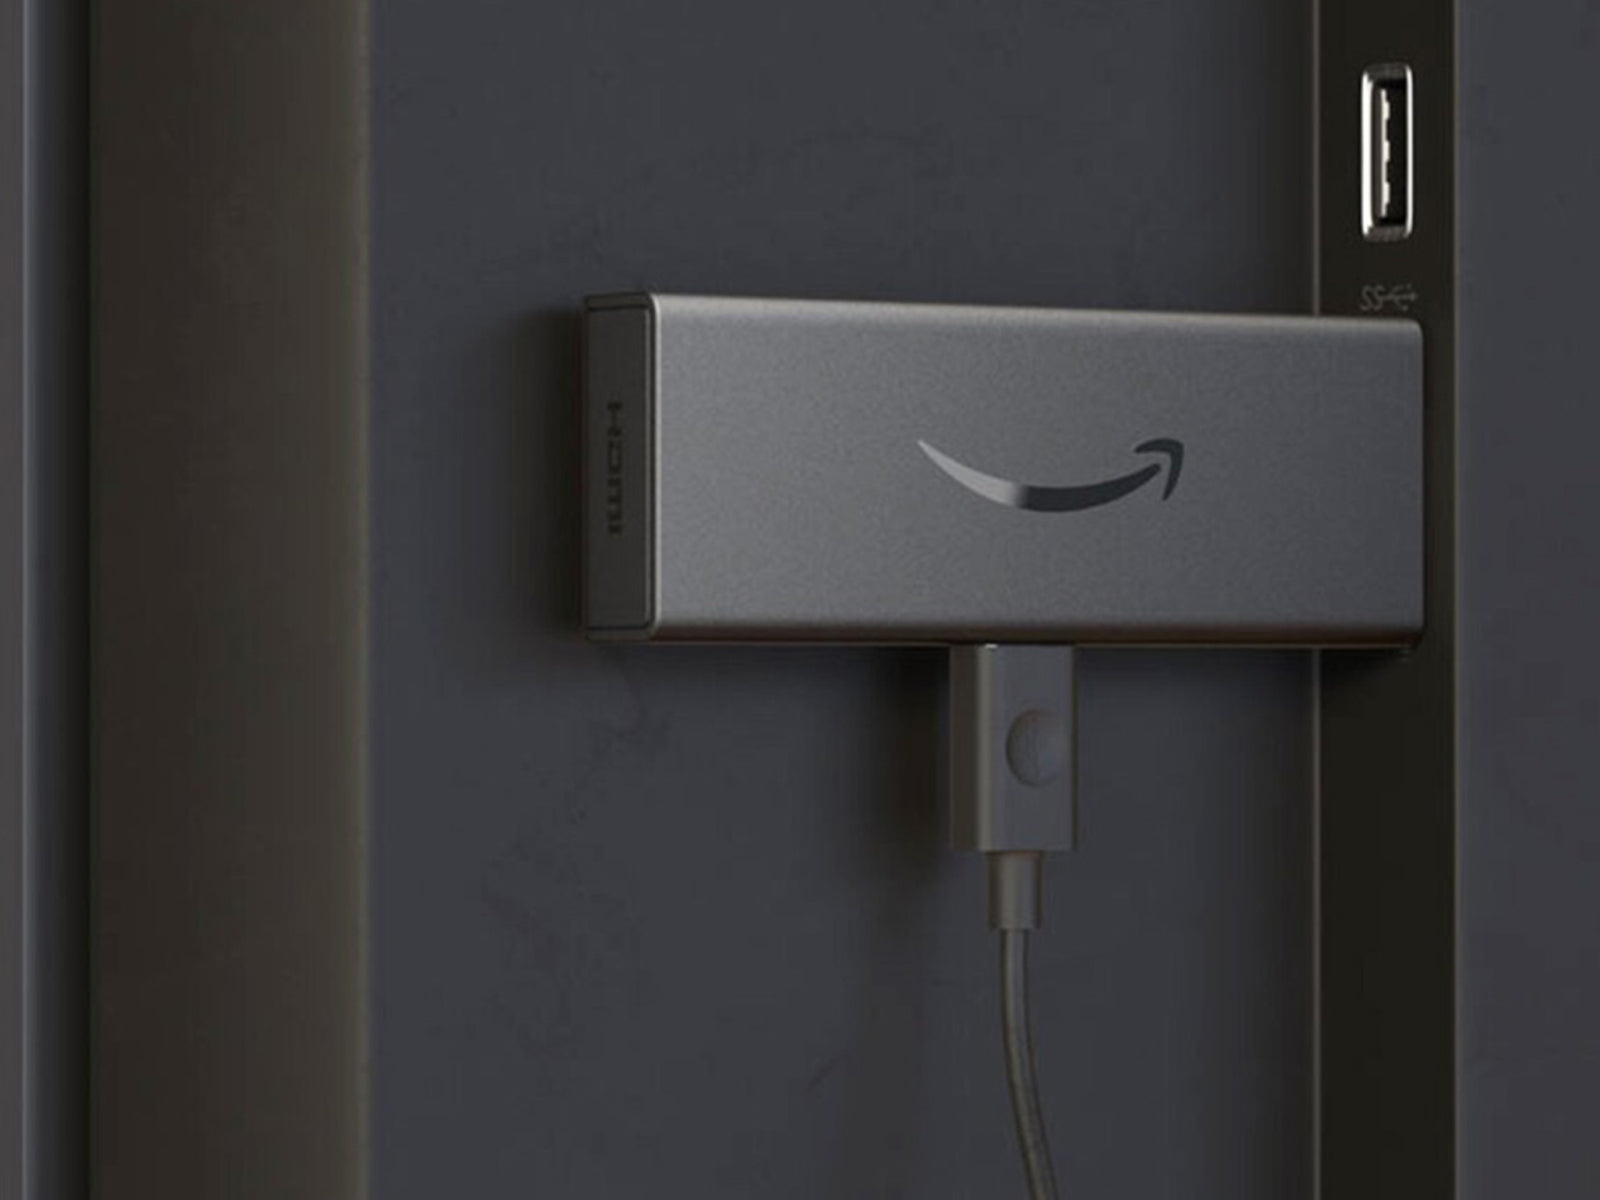 Amazon Fire Tv Stick Plugged Into Tv